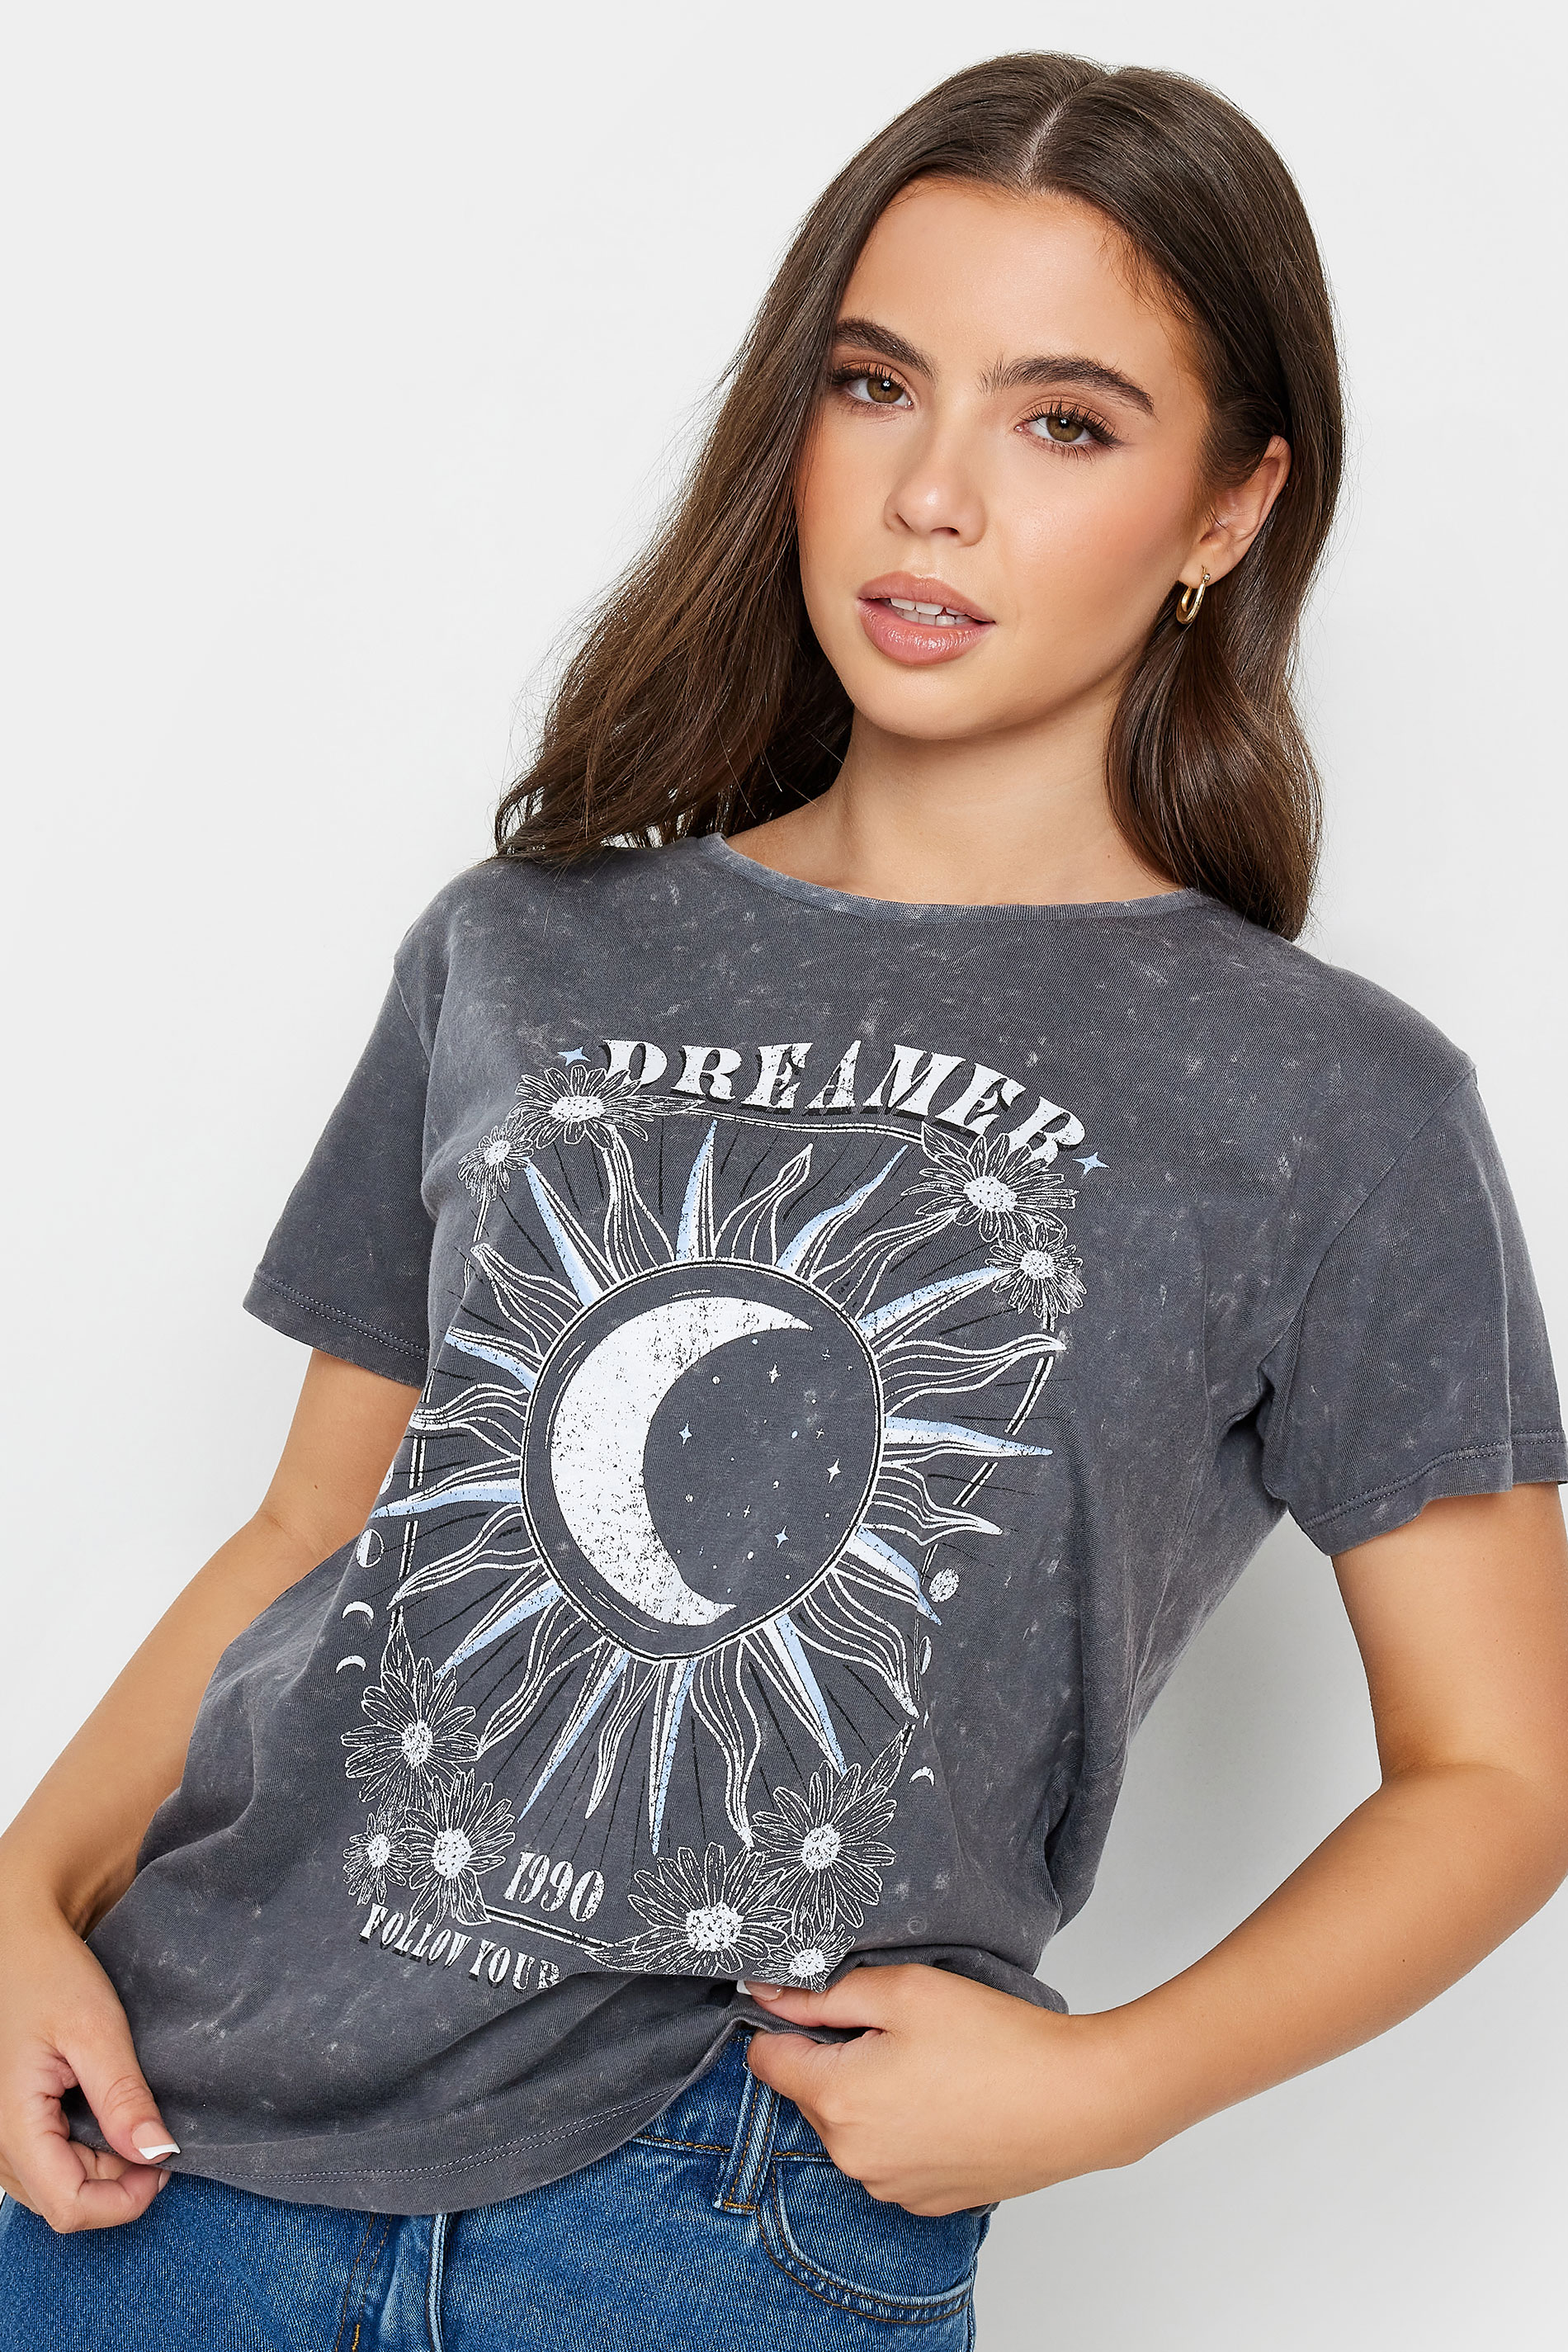 Pixiegirl Charcoal Grey 'Dreamer' Slogan Tshirt 18 Pixiegirl | Petite Women's T-Shirts product